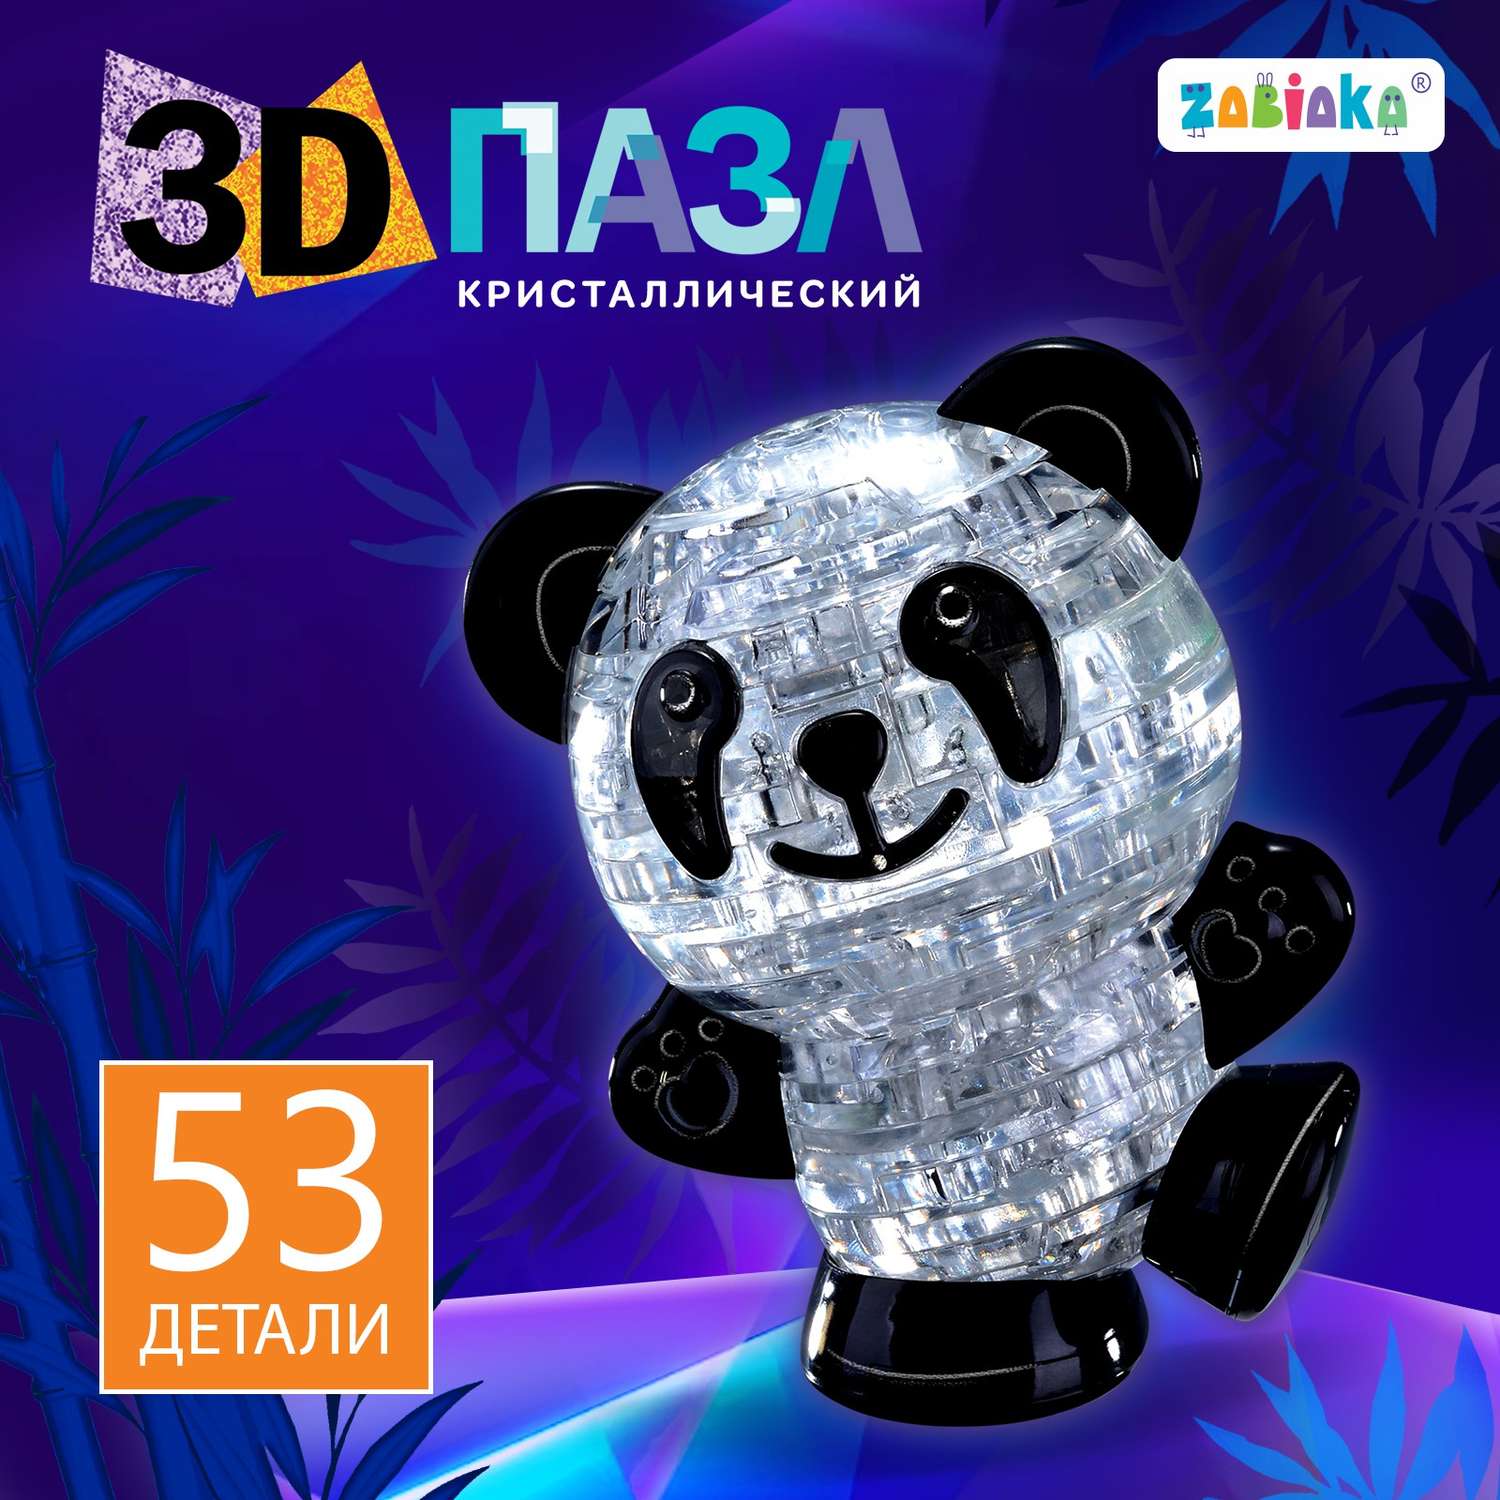 3D-пазл Sima-Land «Панда» кристаллический 53 детали цвета МИКС в ассортименте - фото 1